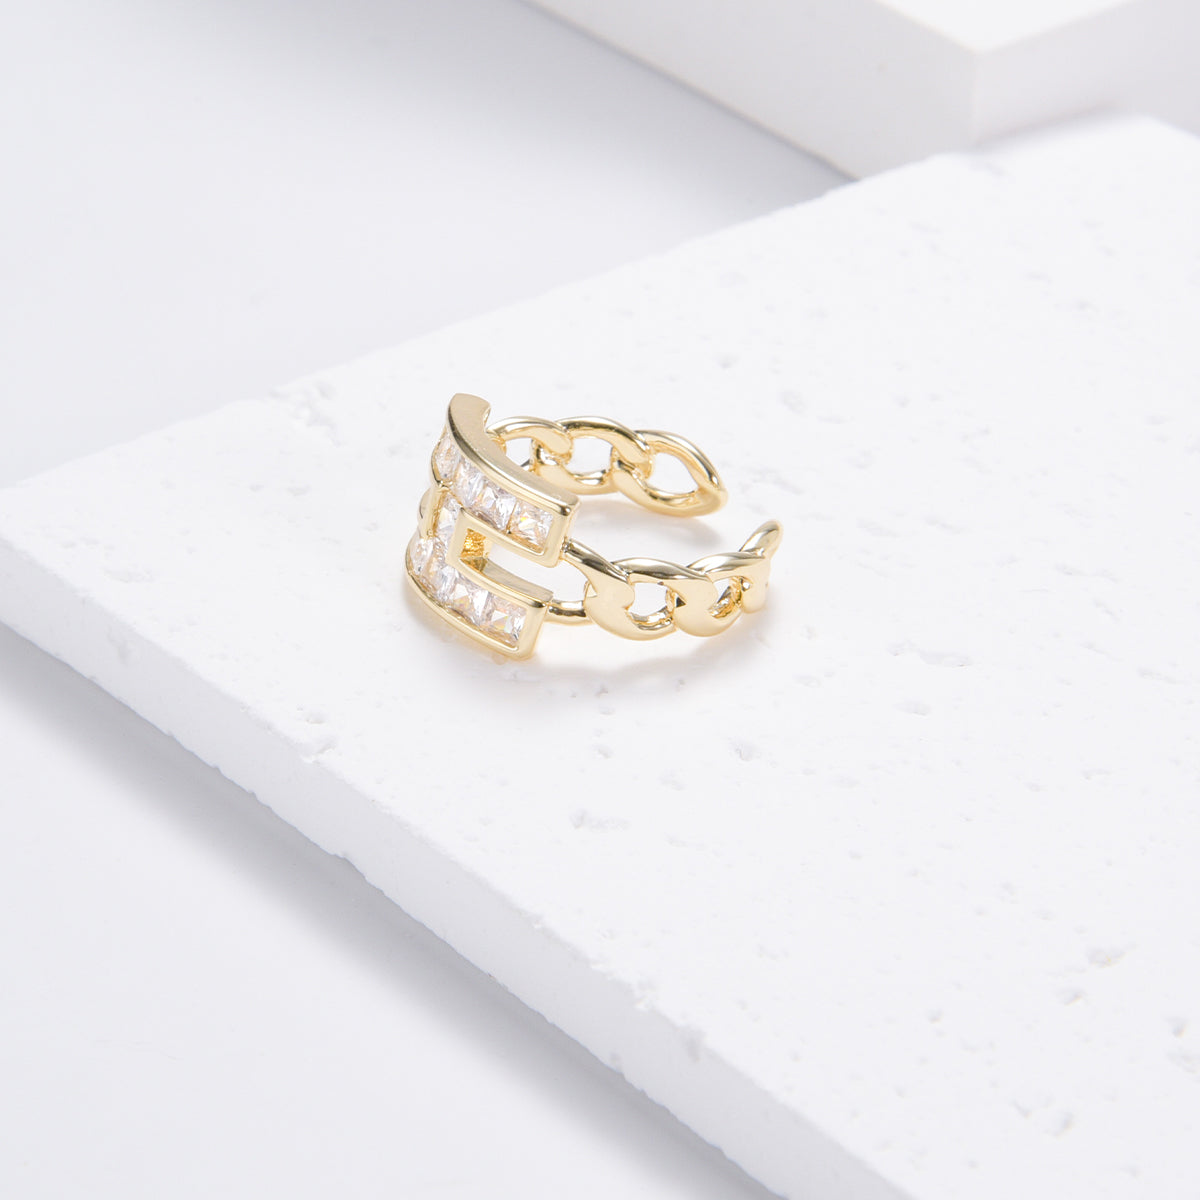 H-shaped golden ring with ravishing white stones